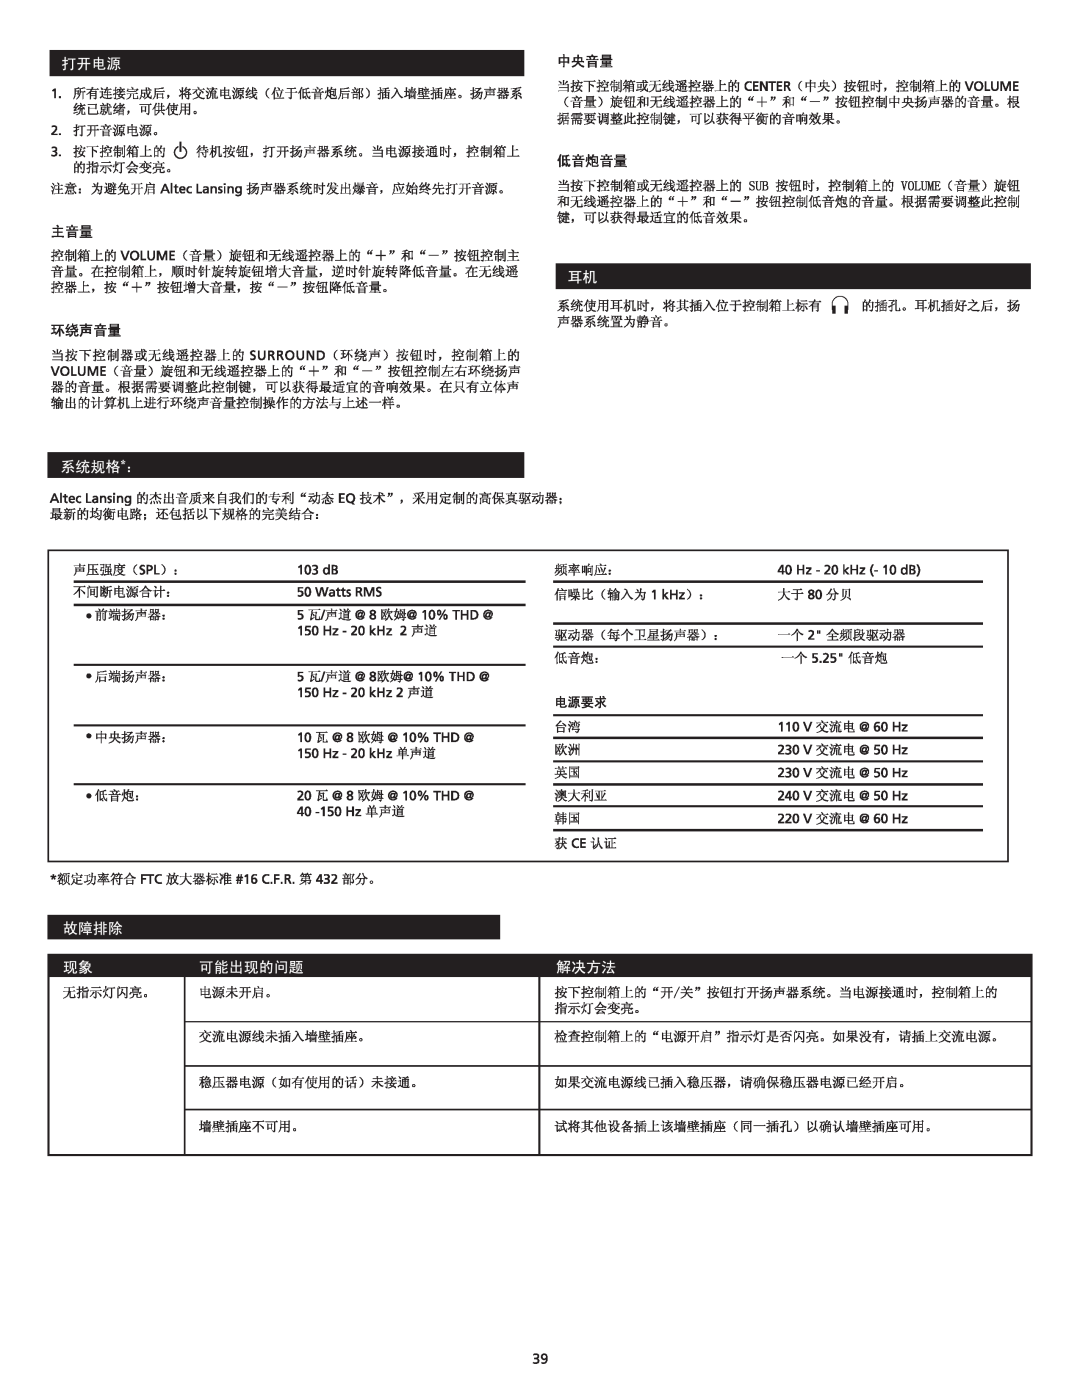 Altec Lansing VS3151R manual 